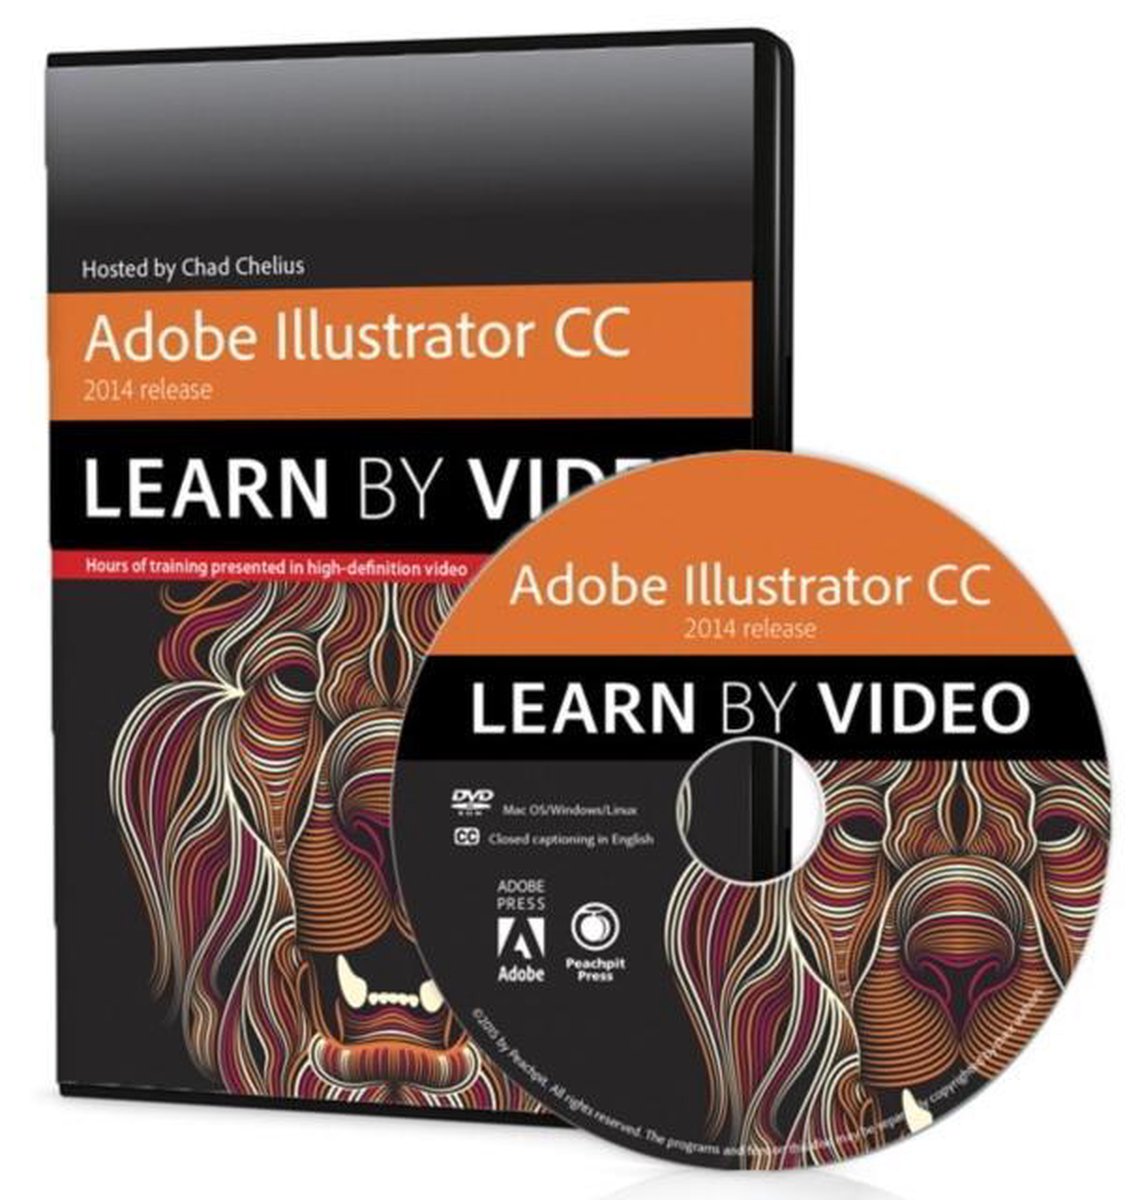 Bol Com Adobe Illustrator Cc Learn By Video 14 Release Dvd S